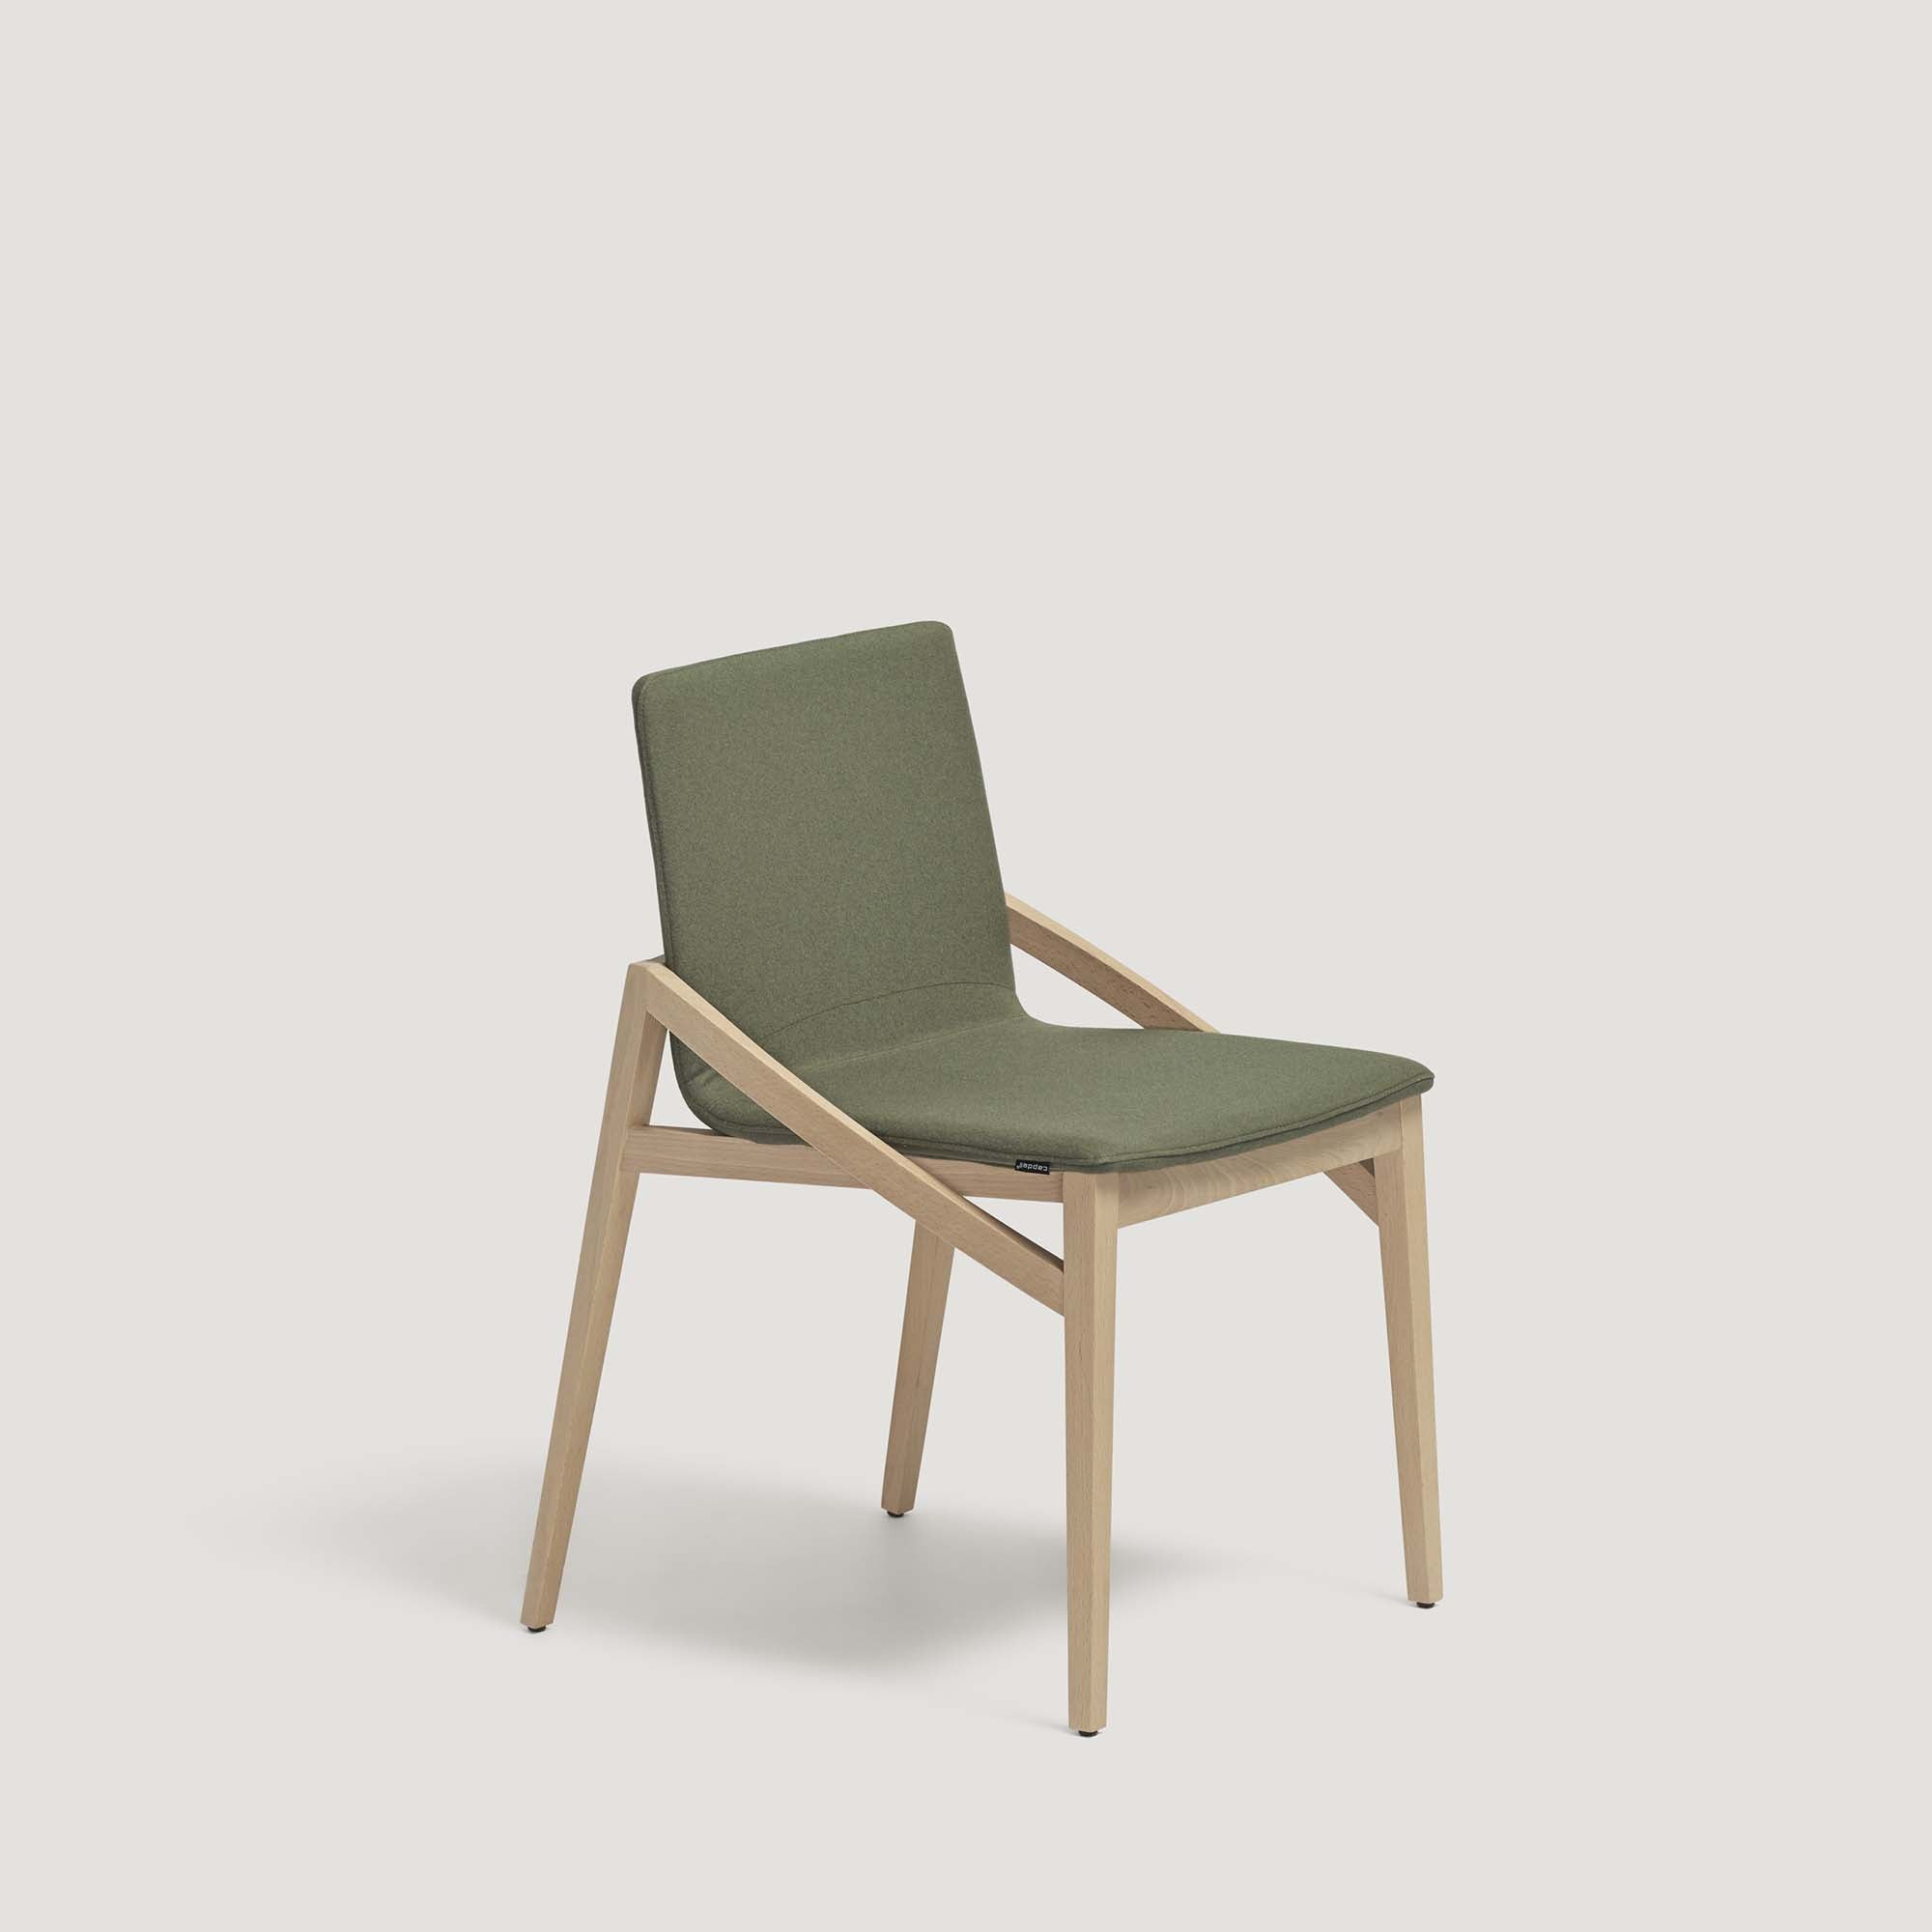 CAPITA Chair beech wood, green fabric upholstery, half-side view